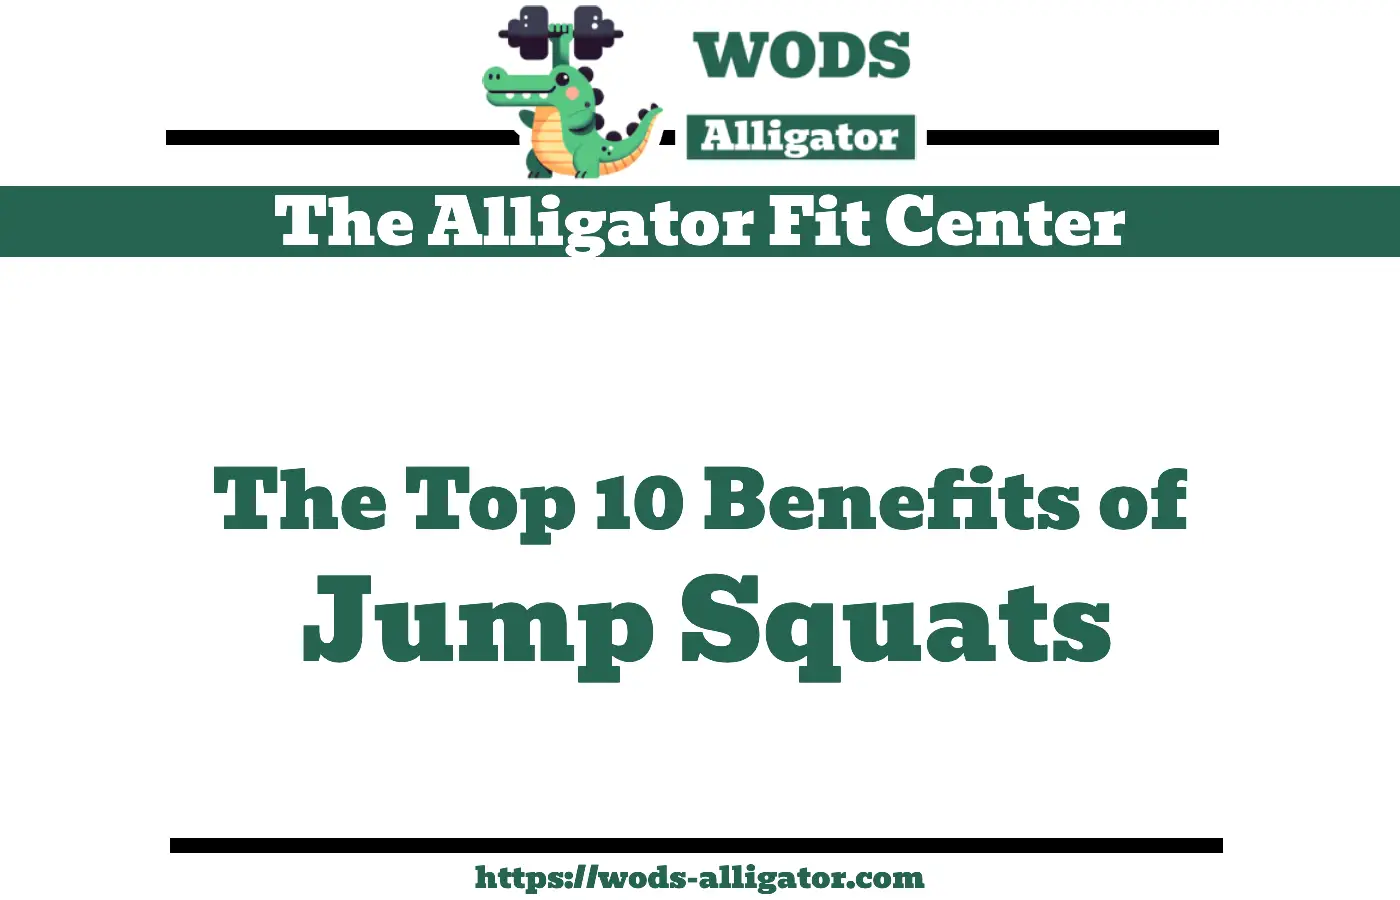 The Top 10 Benefits of Jump Squats